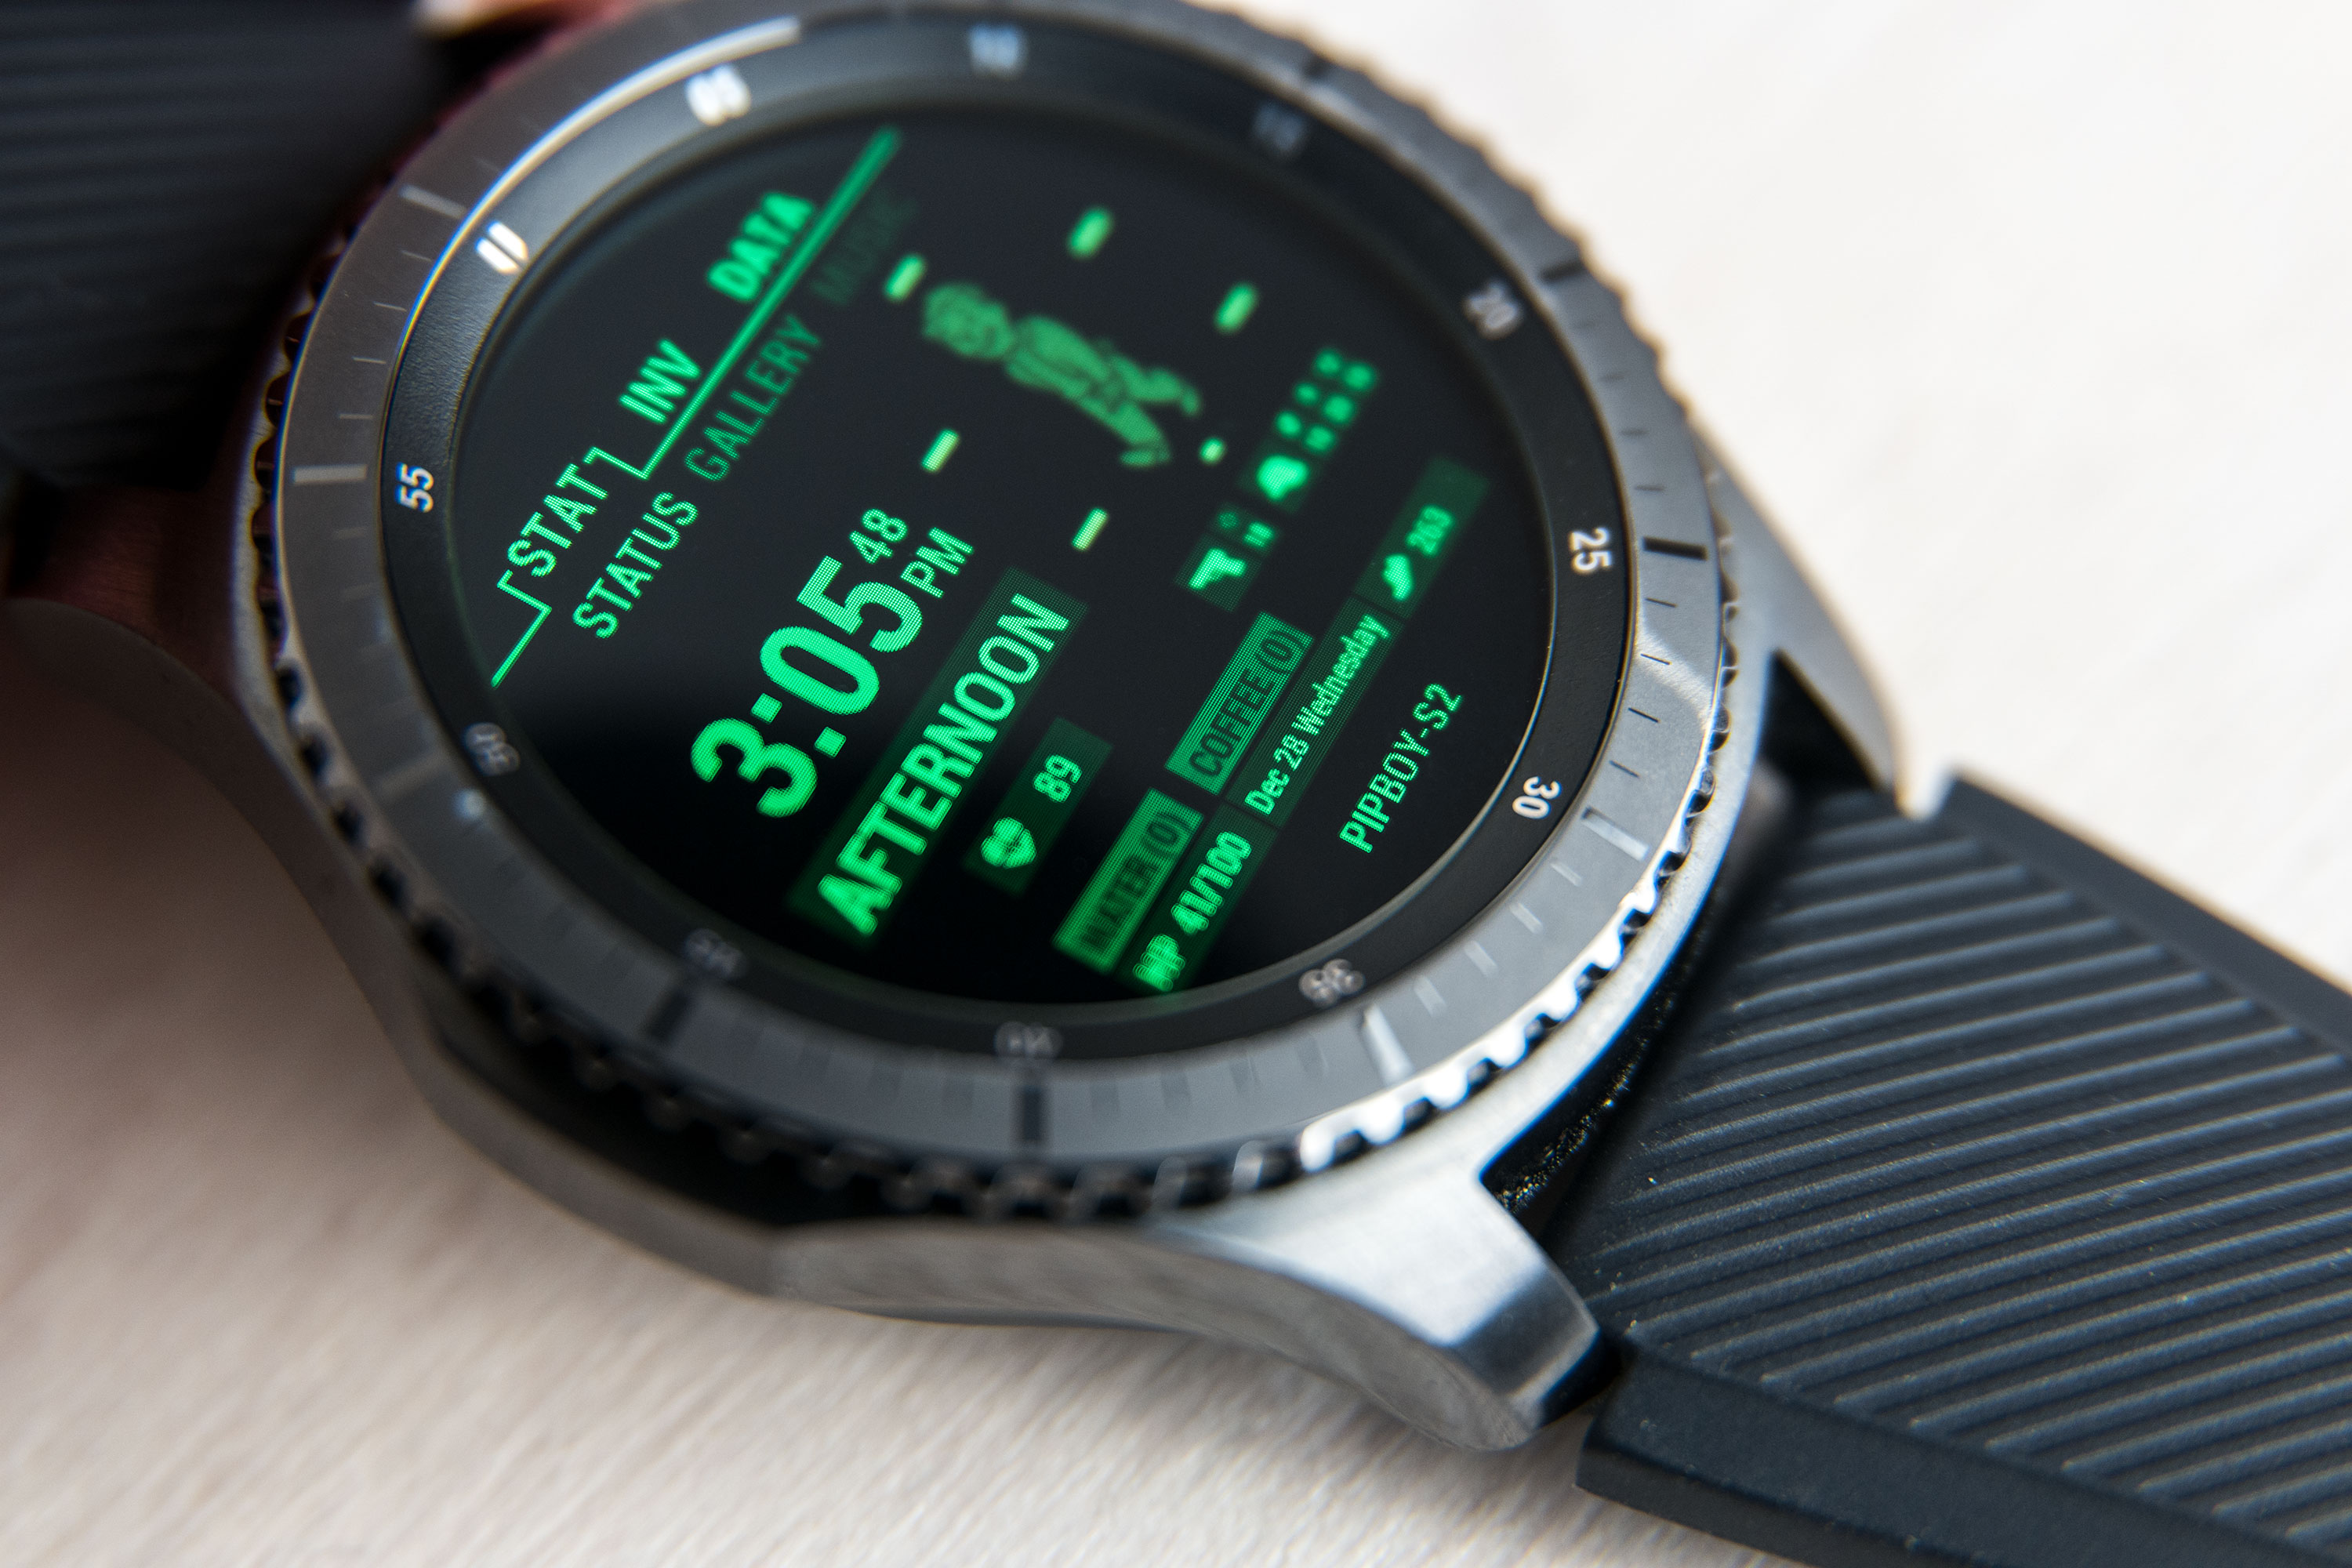 Samsung Galaxy Watch 4 Classic Циферблаты